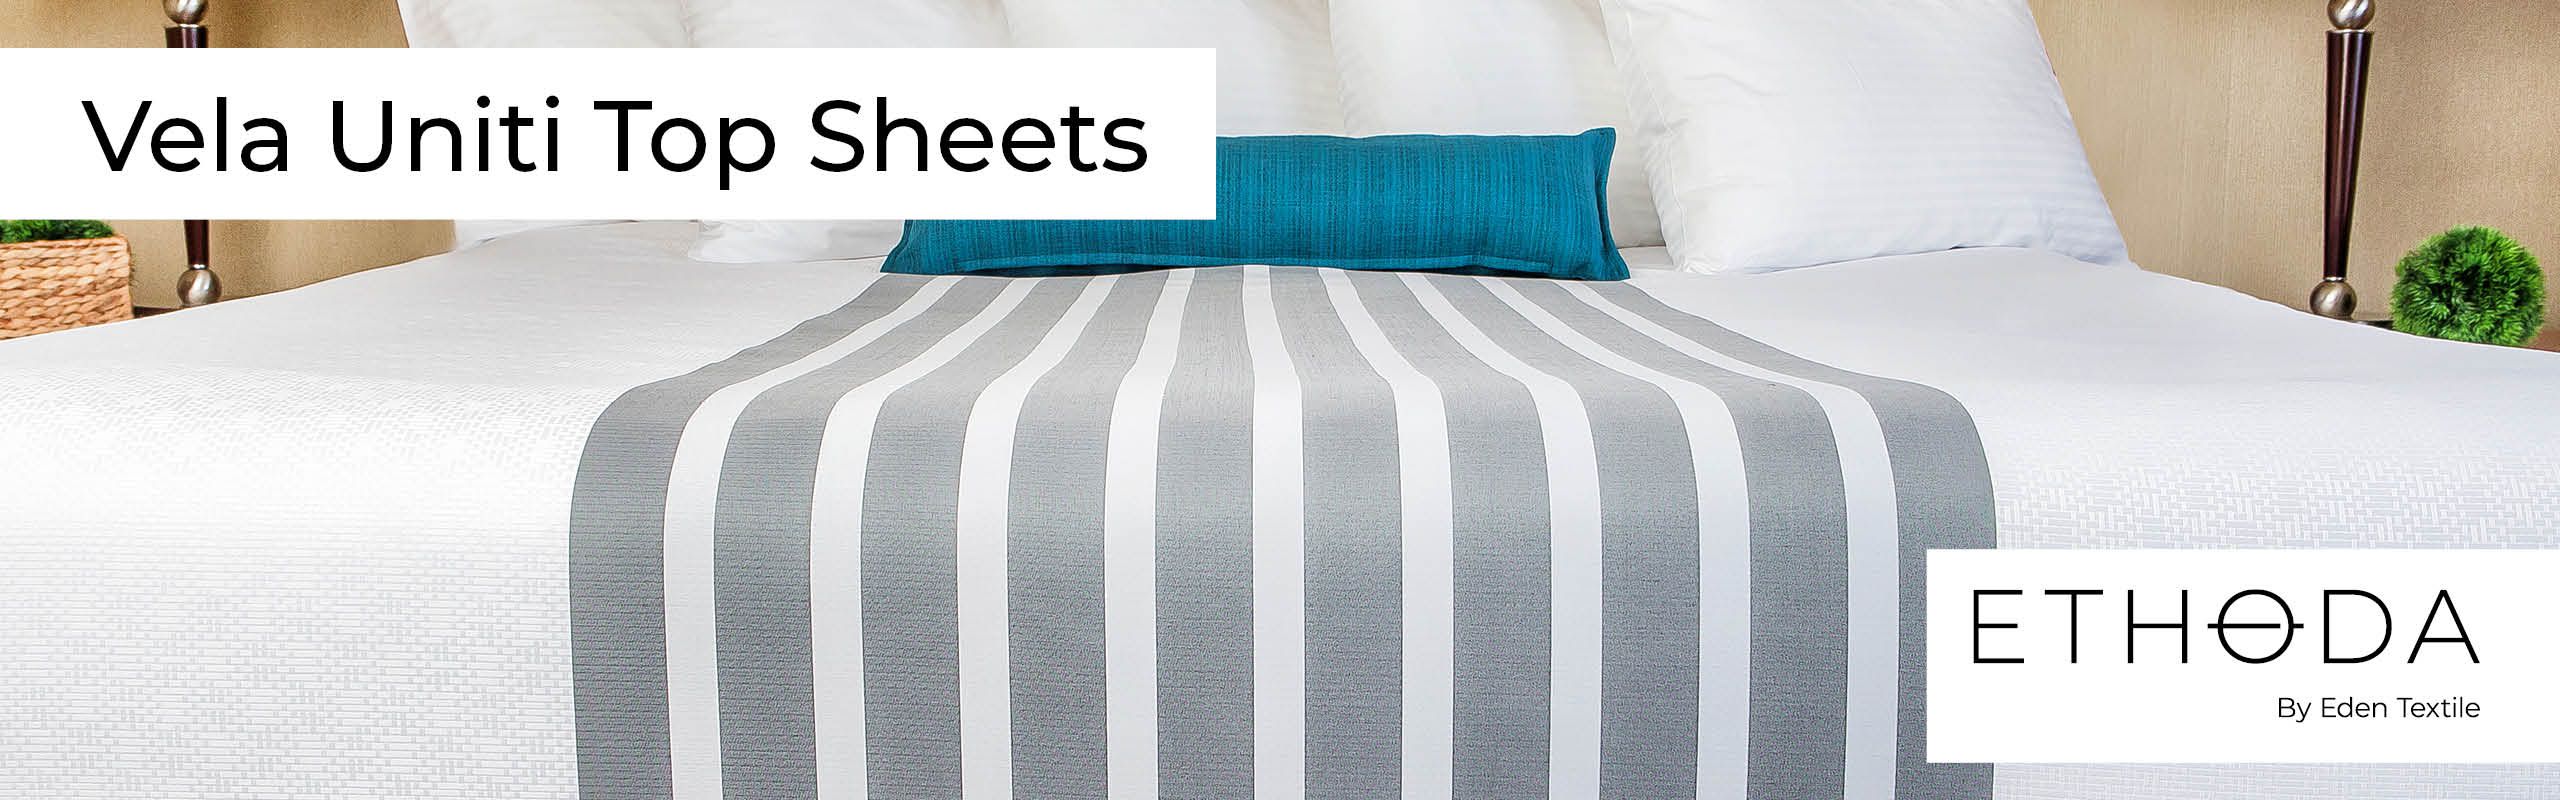 Bed with Vela Uniti Top Sheet Vertical Regency Stripe Pattern